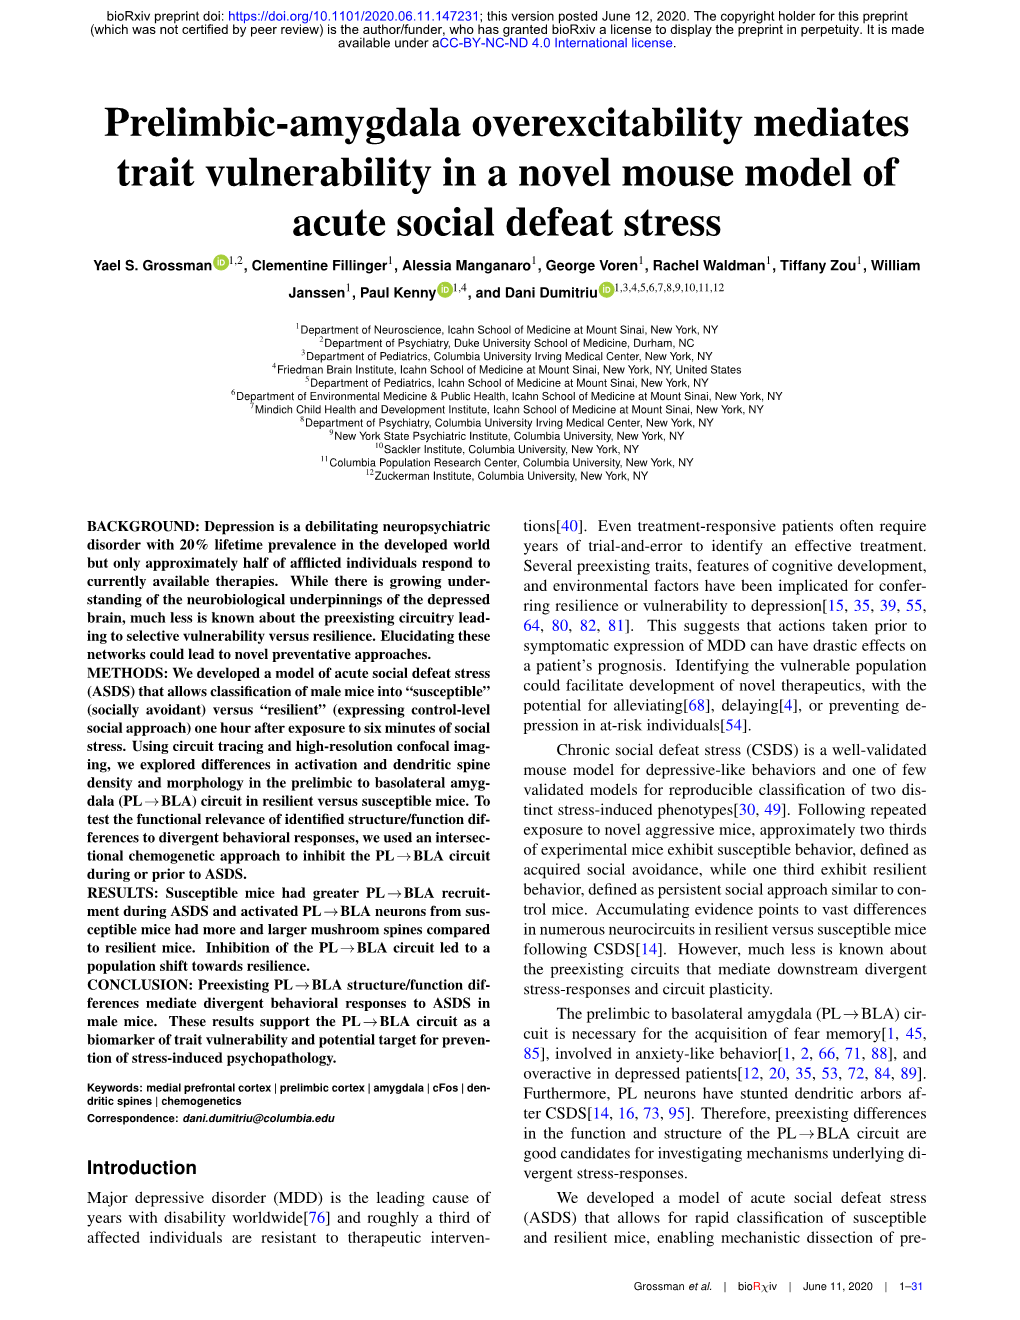 Prelimbic-Amygdala Overexcitability Mediates Trait Vulnerability in a Novel Mouse Model of Acute Social Defeat Stress